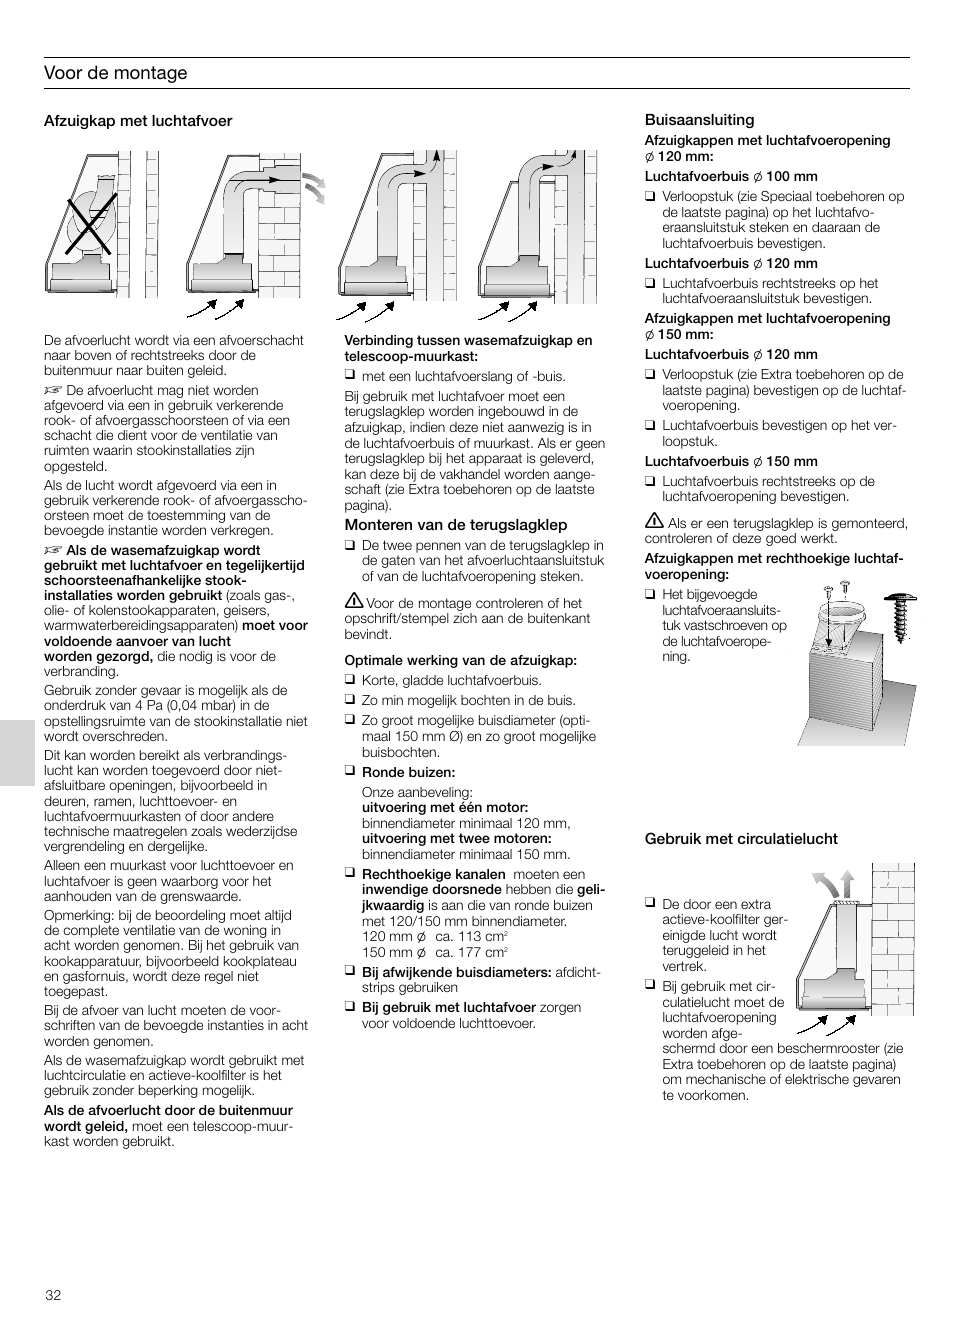 Voor de montage | Siemens LB75564 User Manual | Page 32 / 64 | Original ...